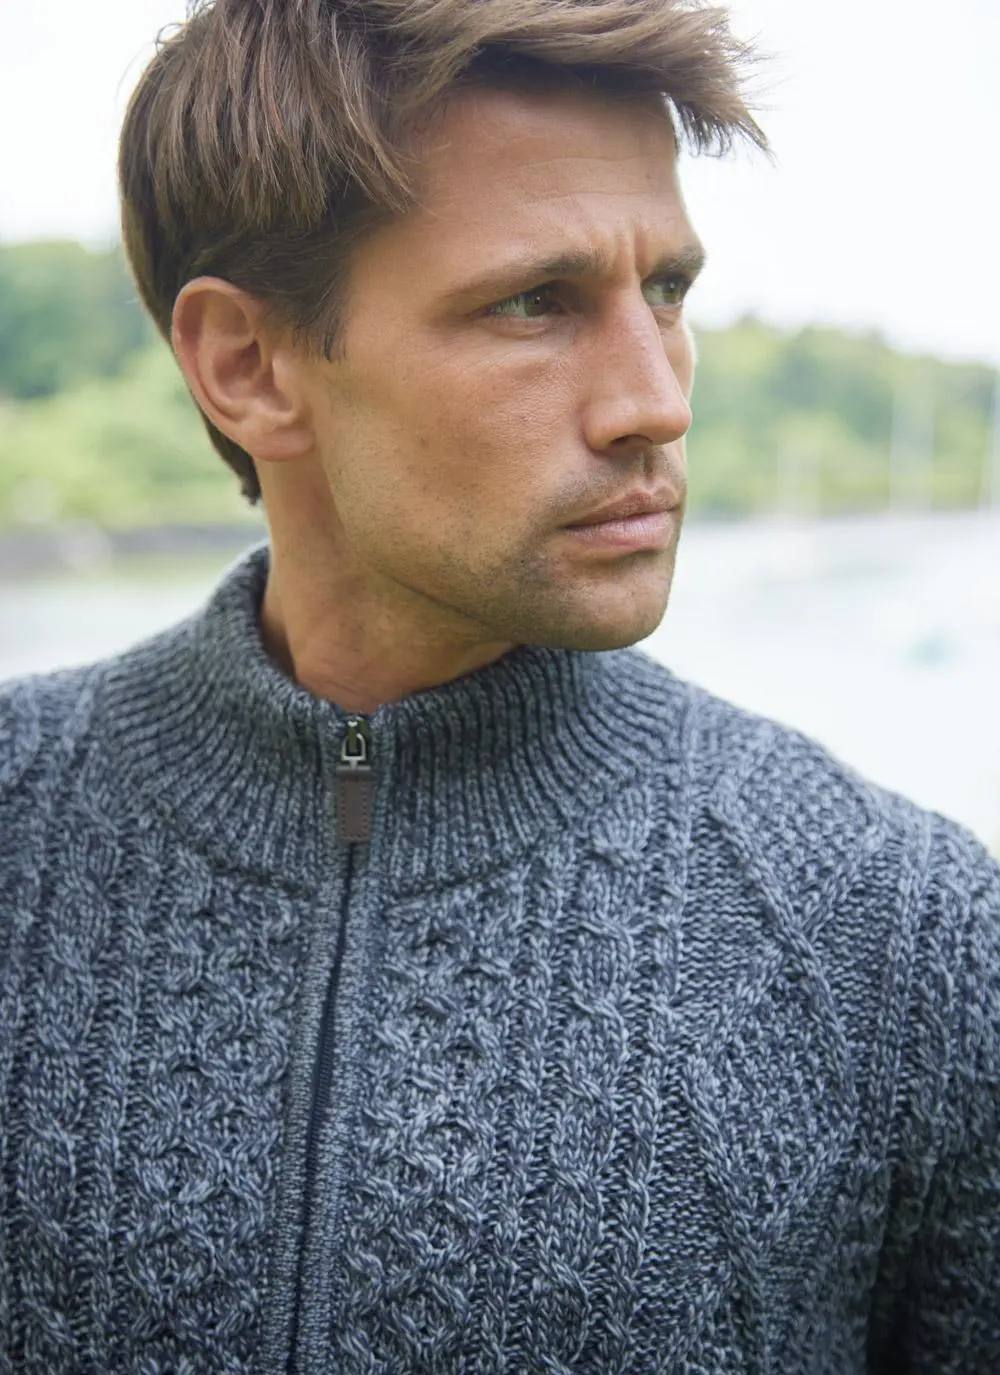 Cian Full Zip Aran Sweater in Slate | Aran Sweaters for Men | Blarney